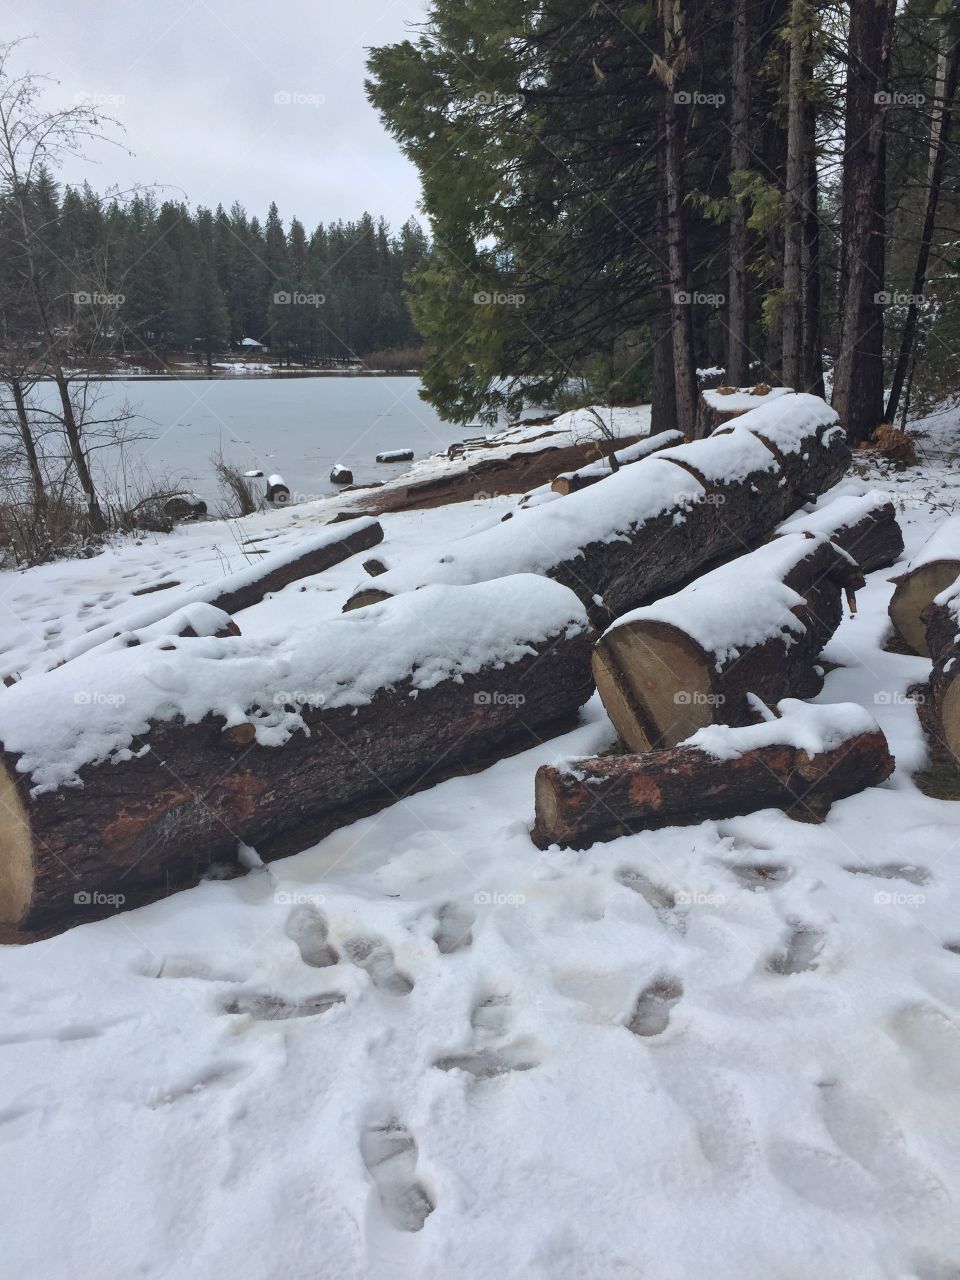 Snowy logs